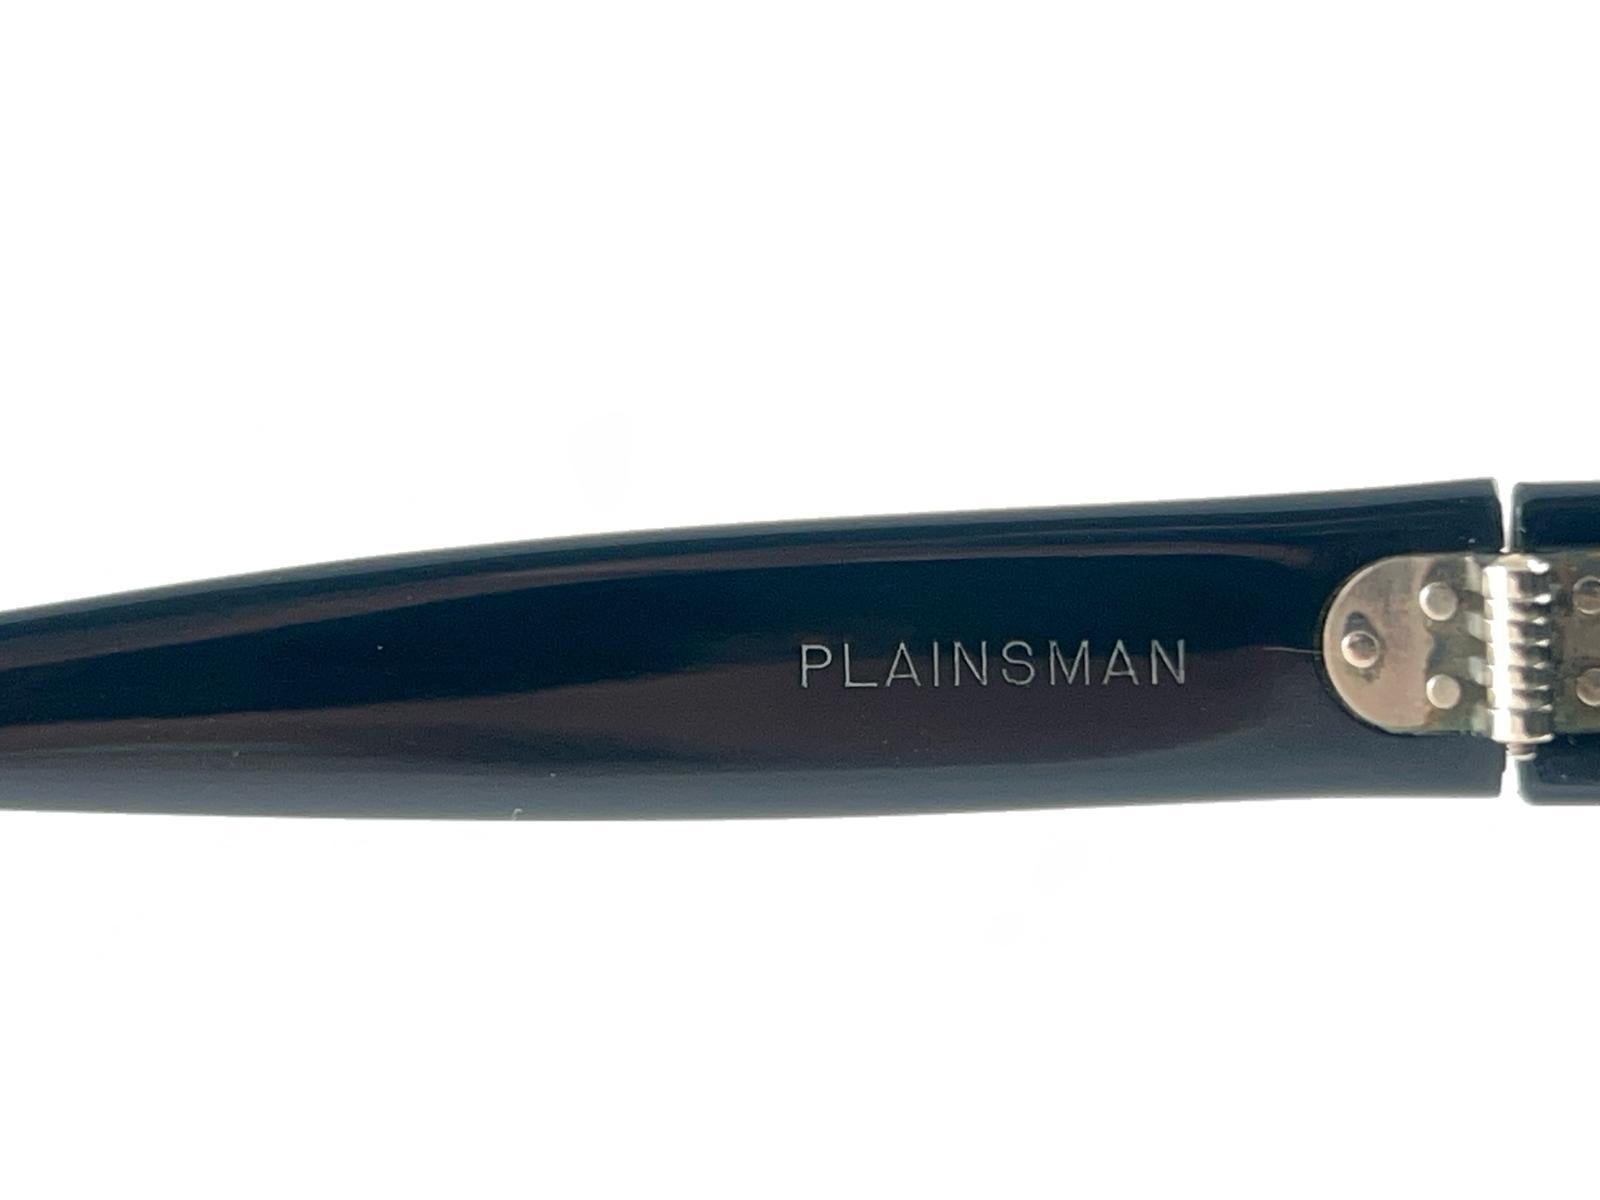  New Vintage Ray Ban Plainsman 1960's Mid Century G15 Lens USA B&L Sunglasses For Sale 8